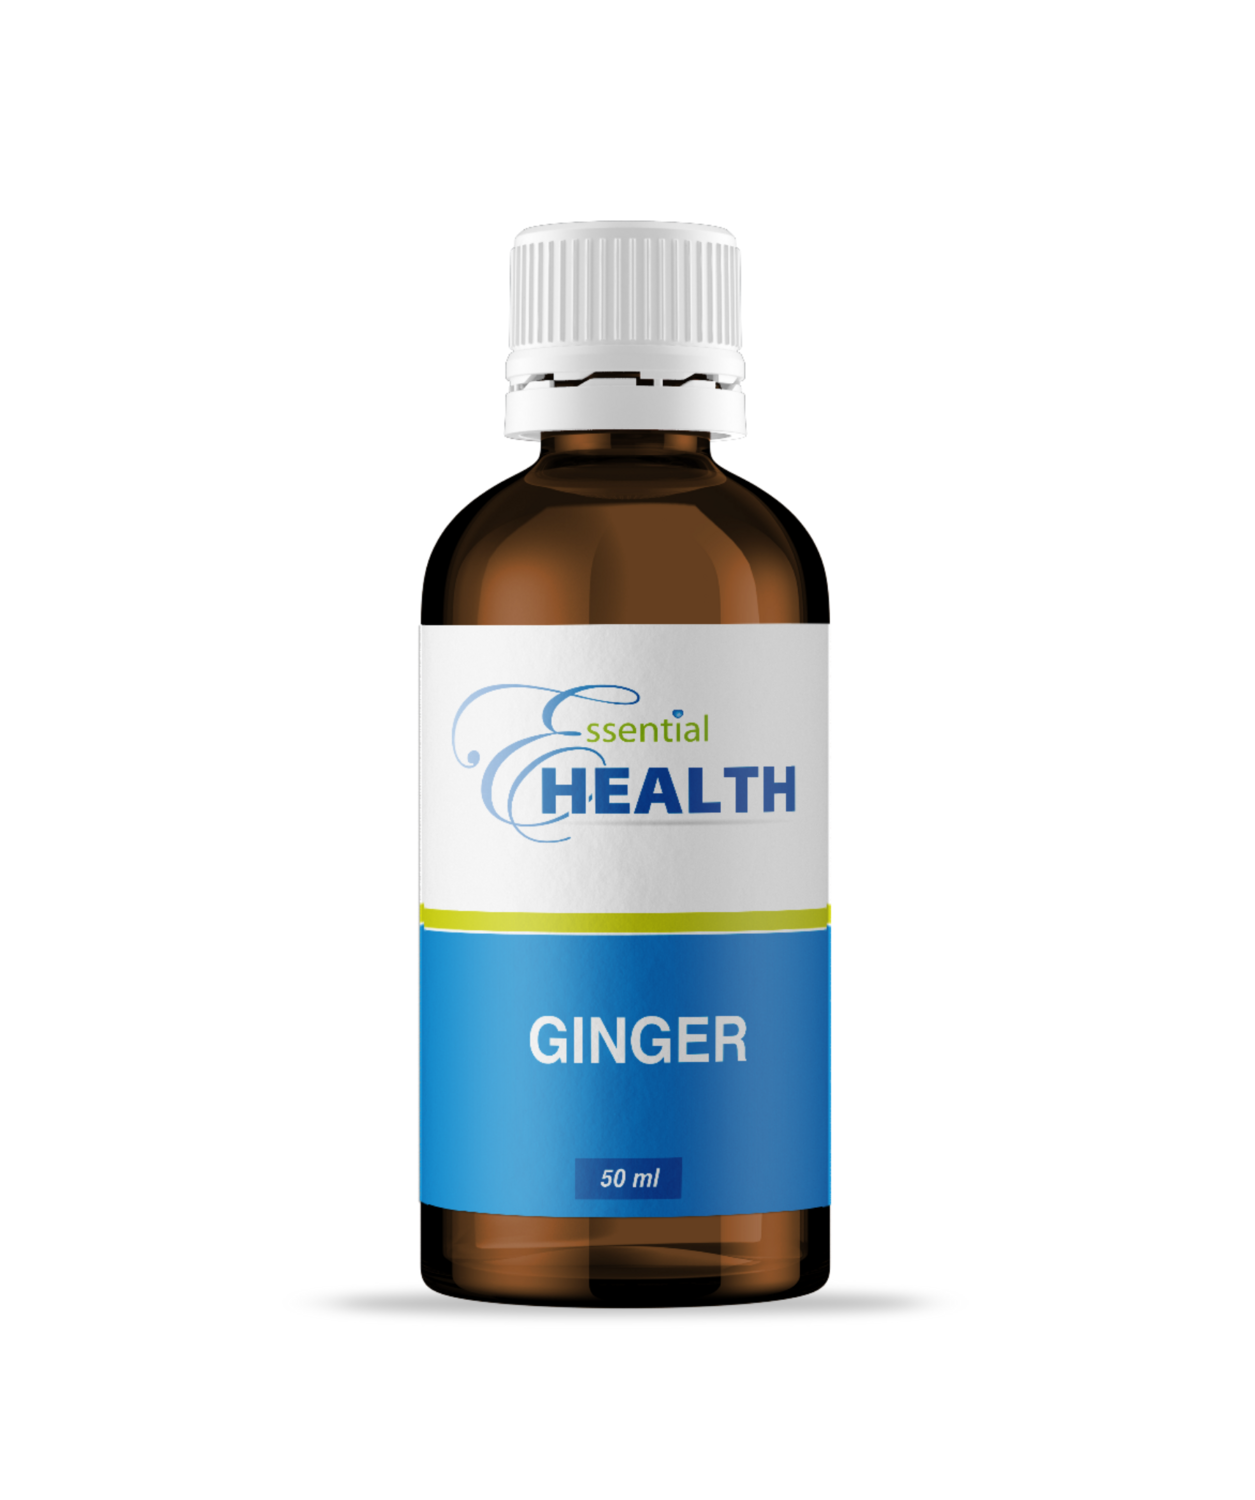 Essential Health Ginger (50ml)